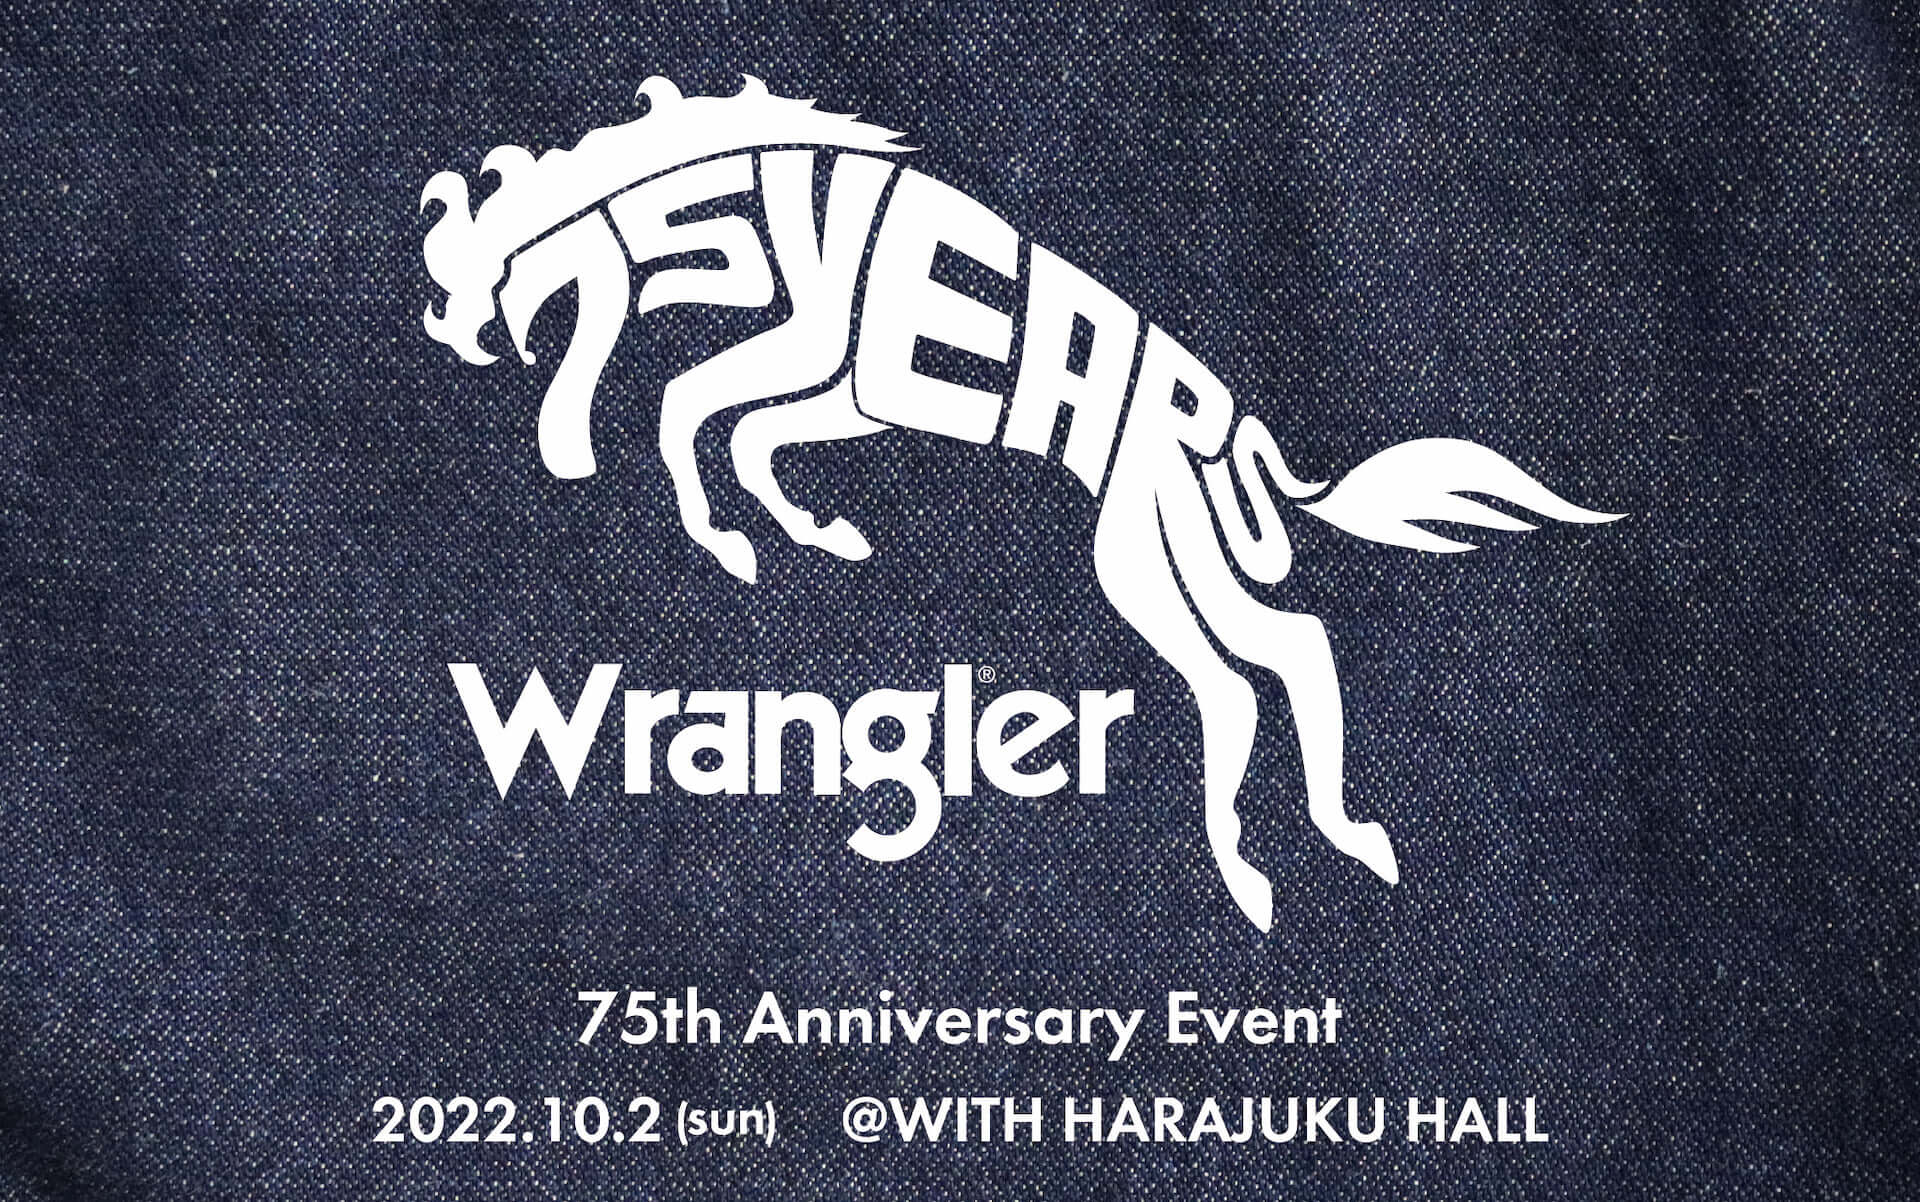 Wrangler 75th Anniversary Event